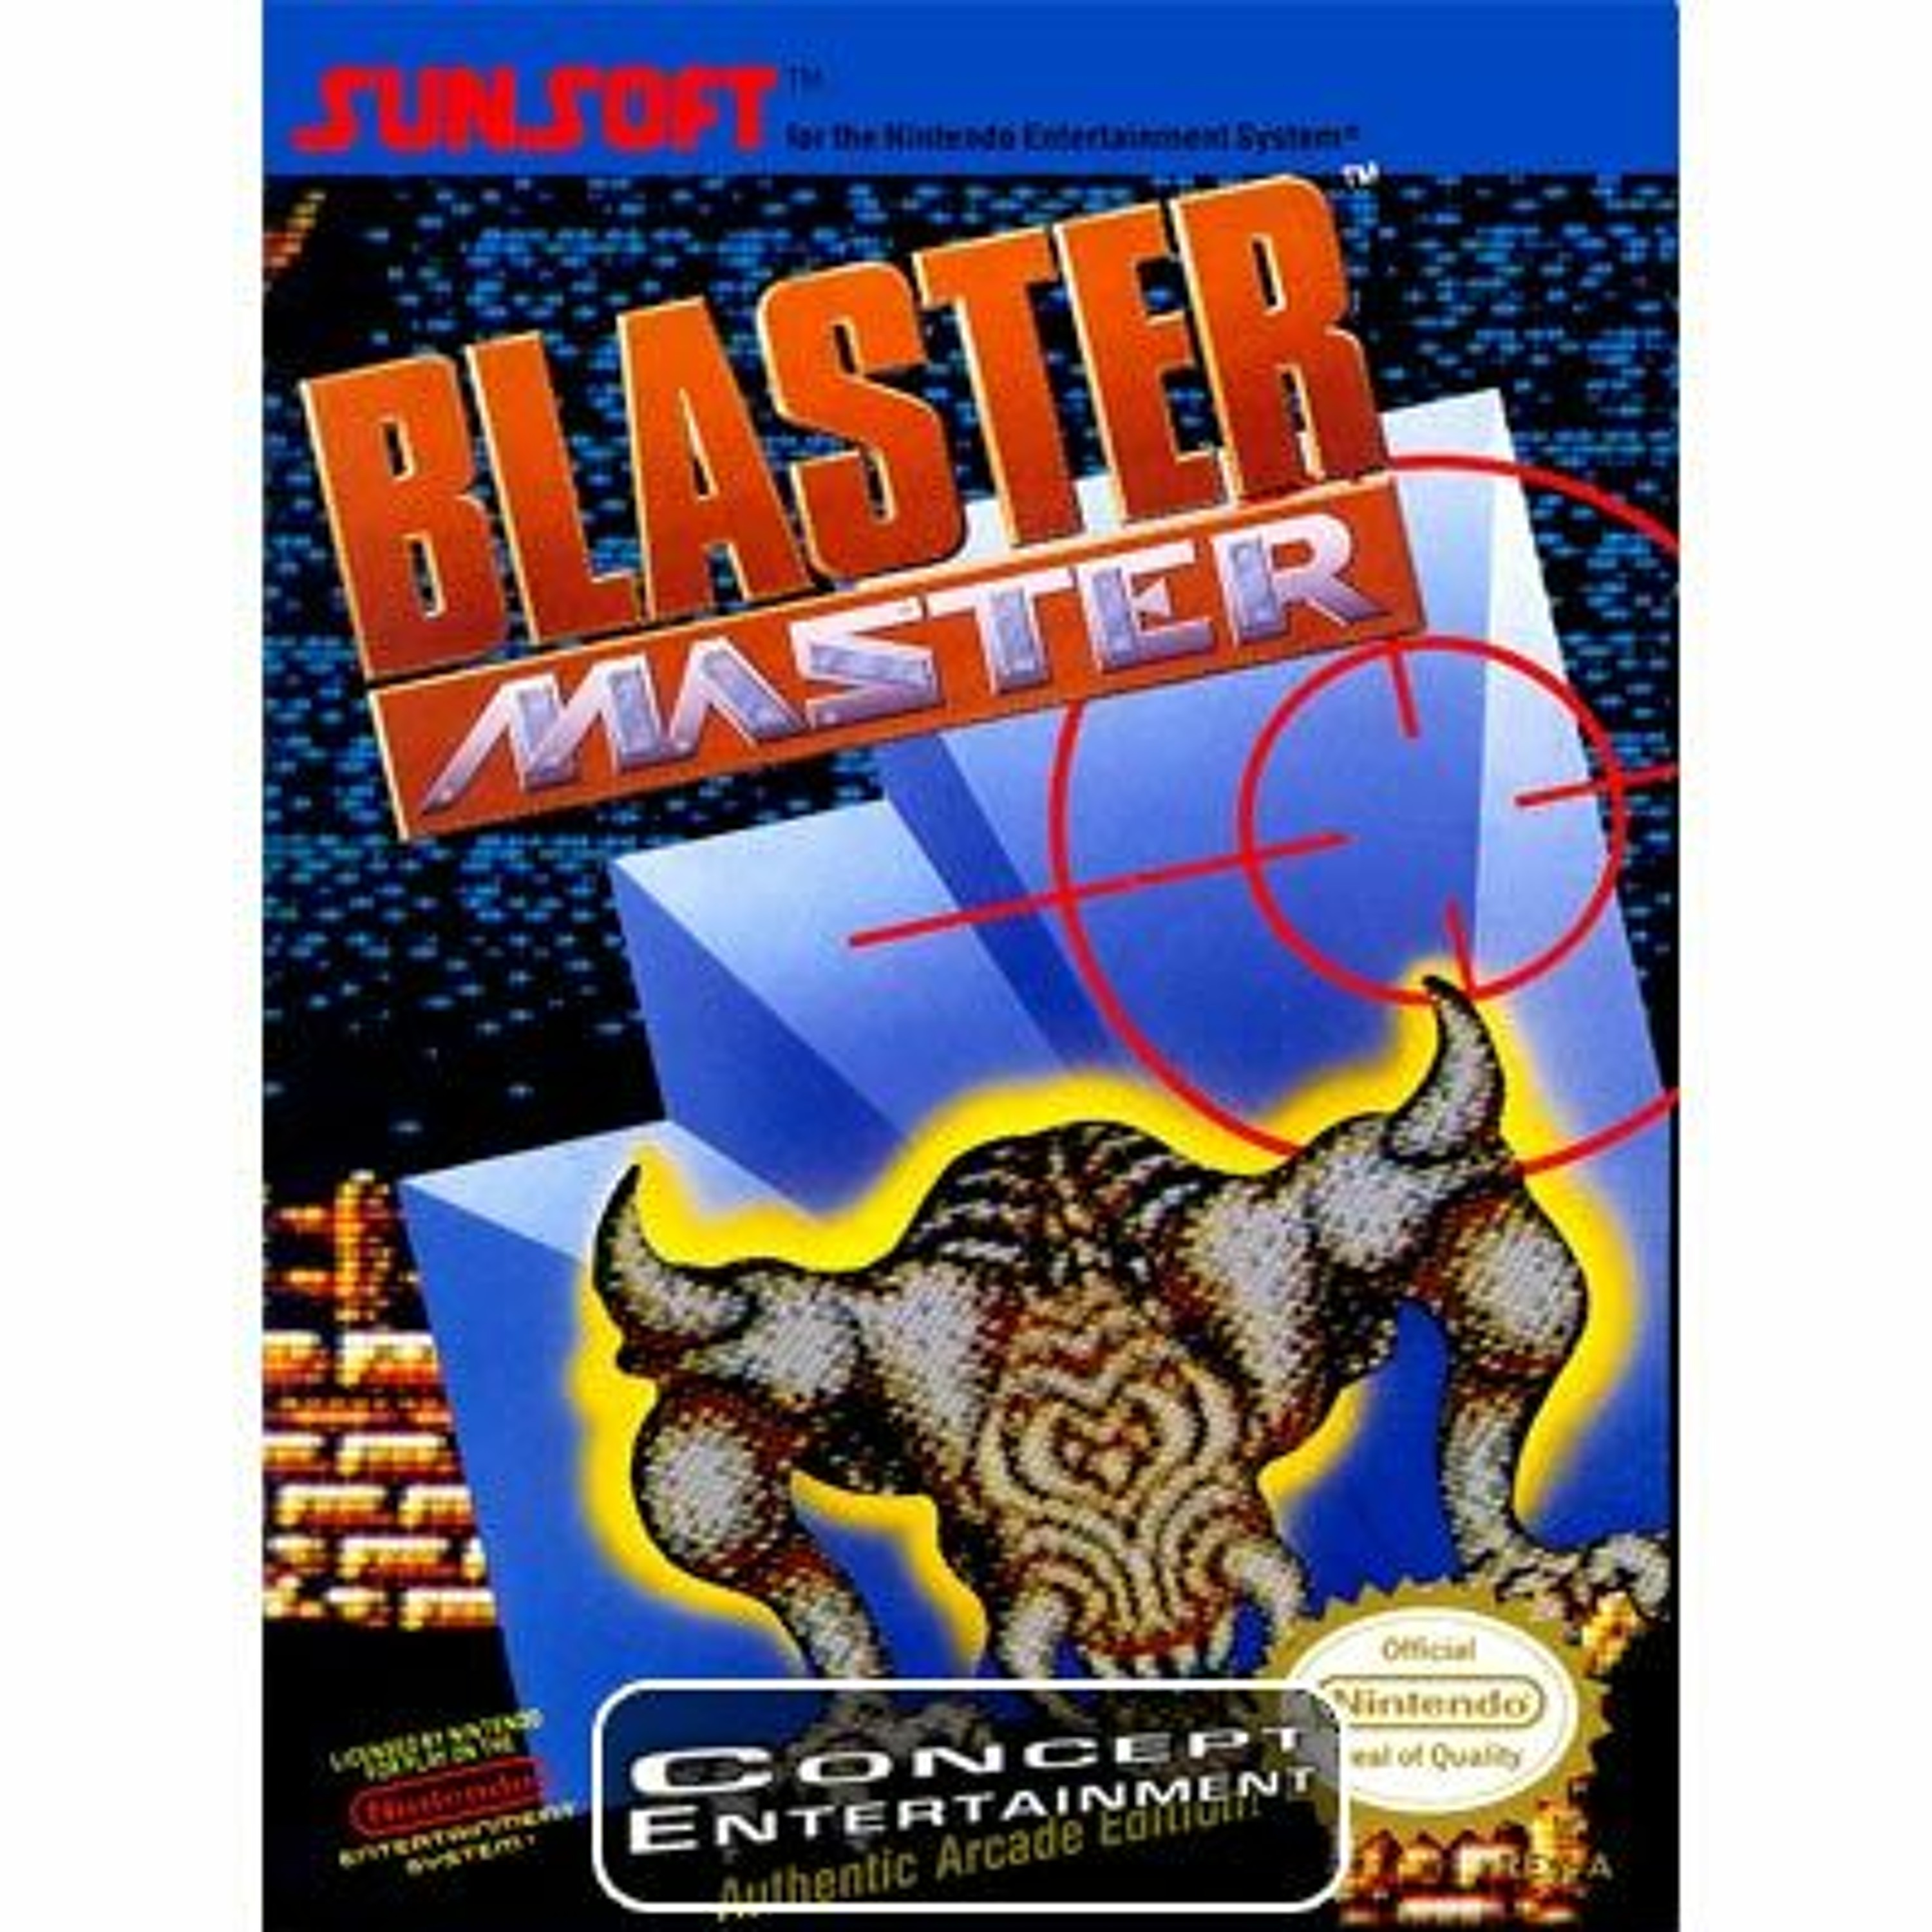 RetrovaniAss #13- Blaster Master